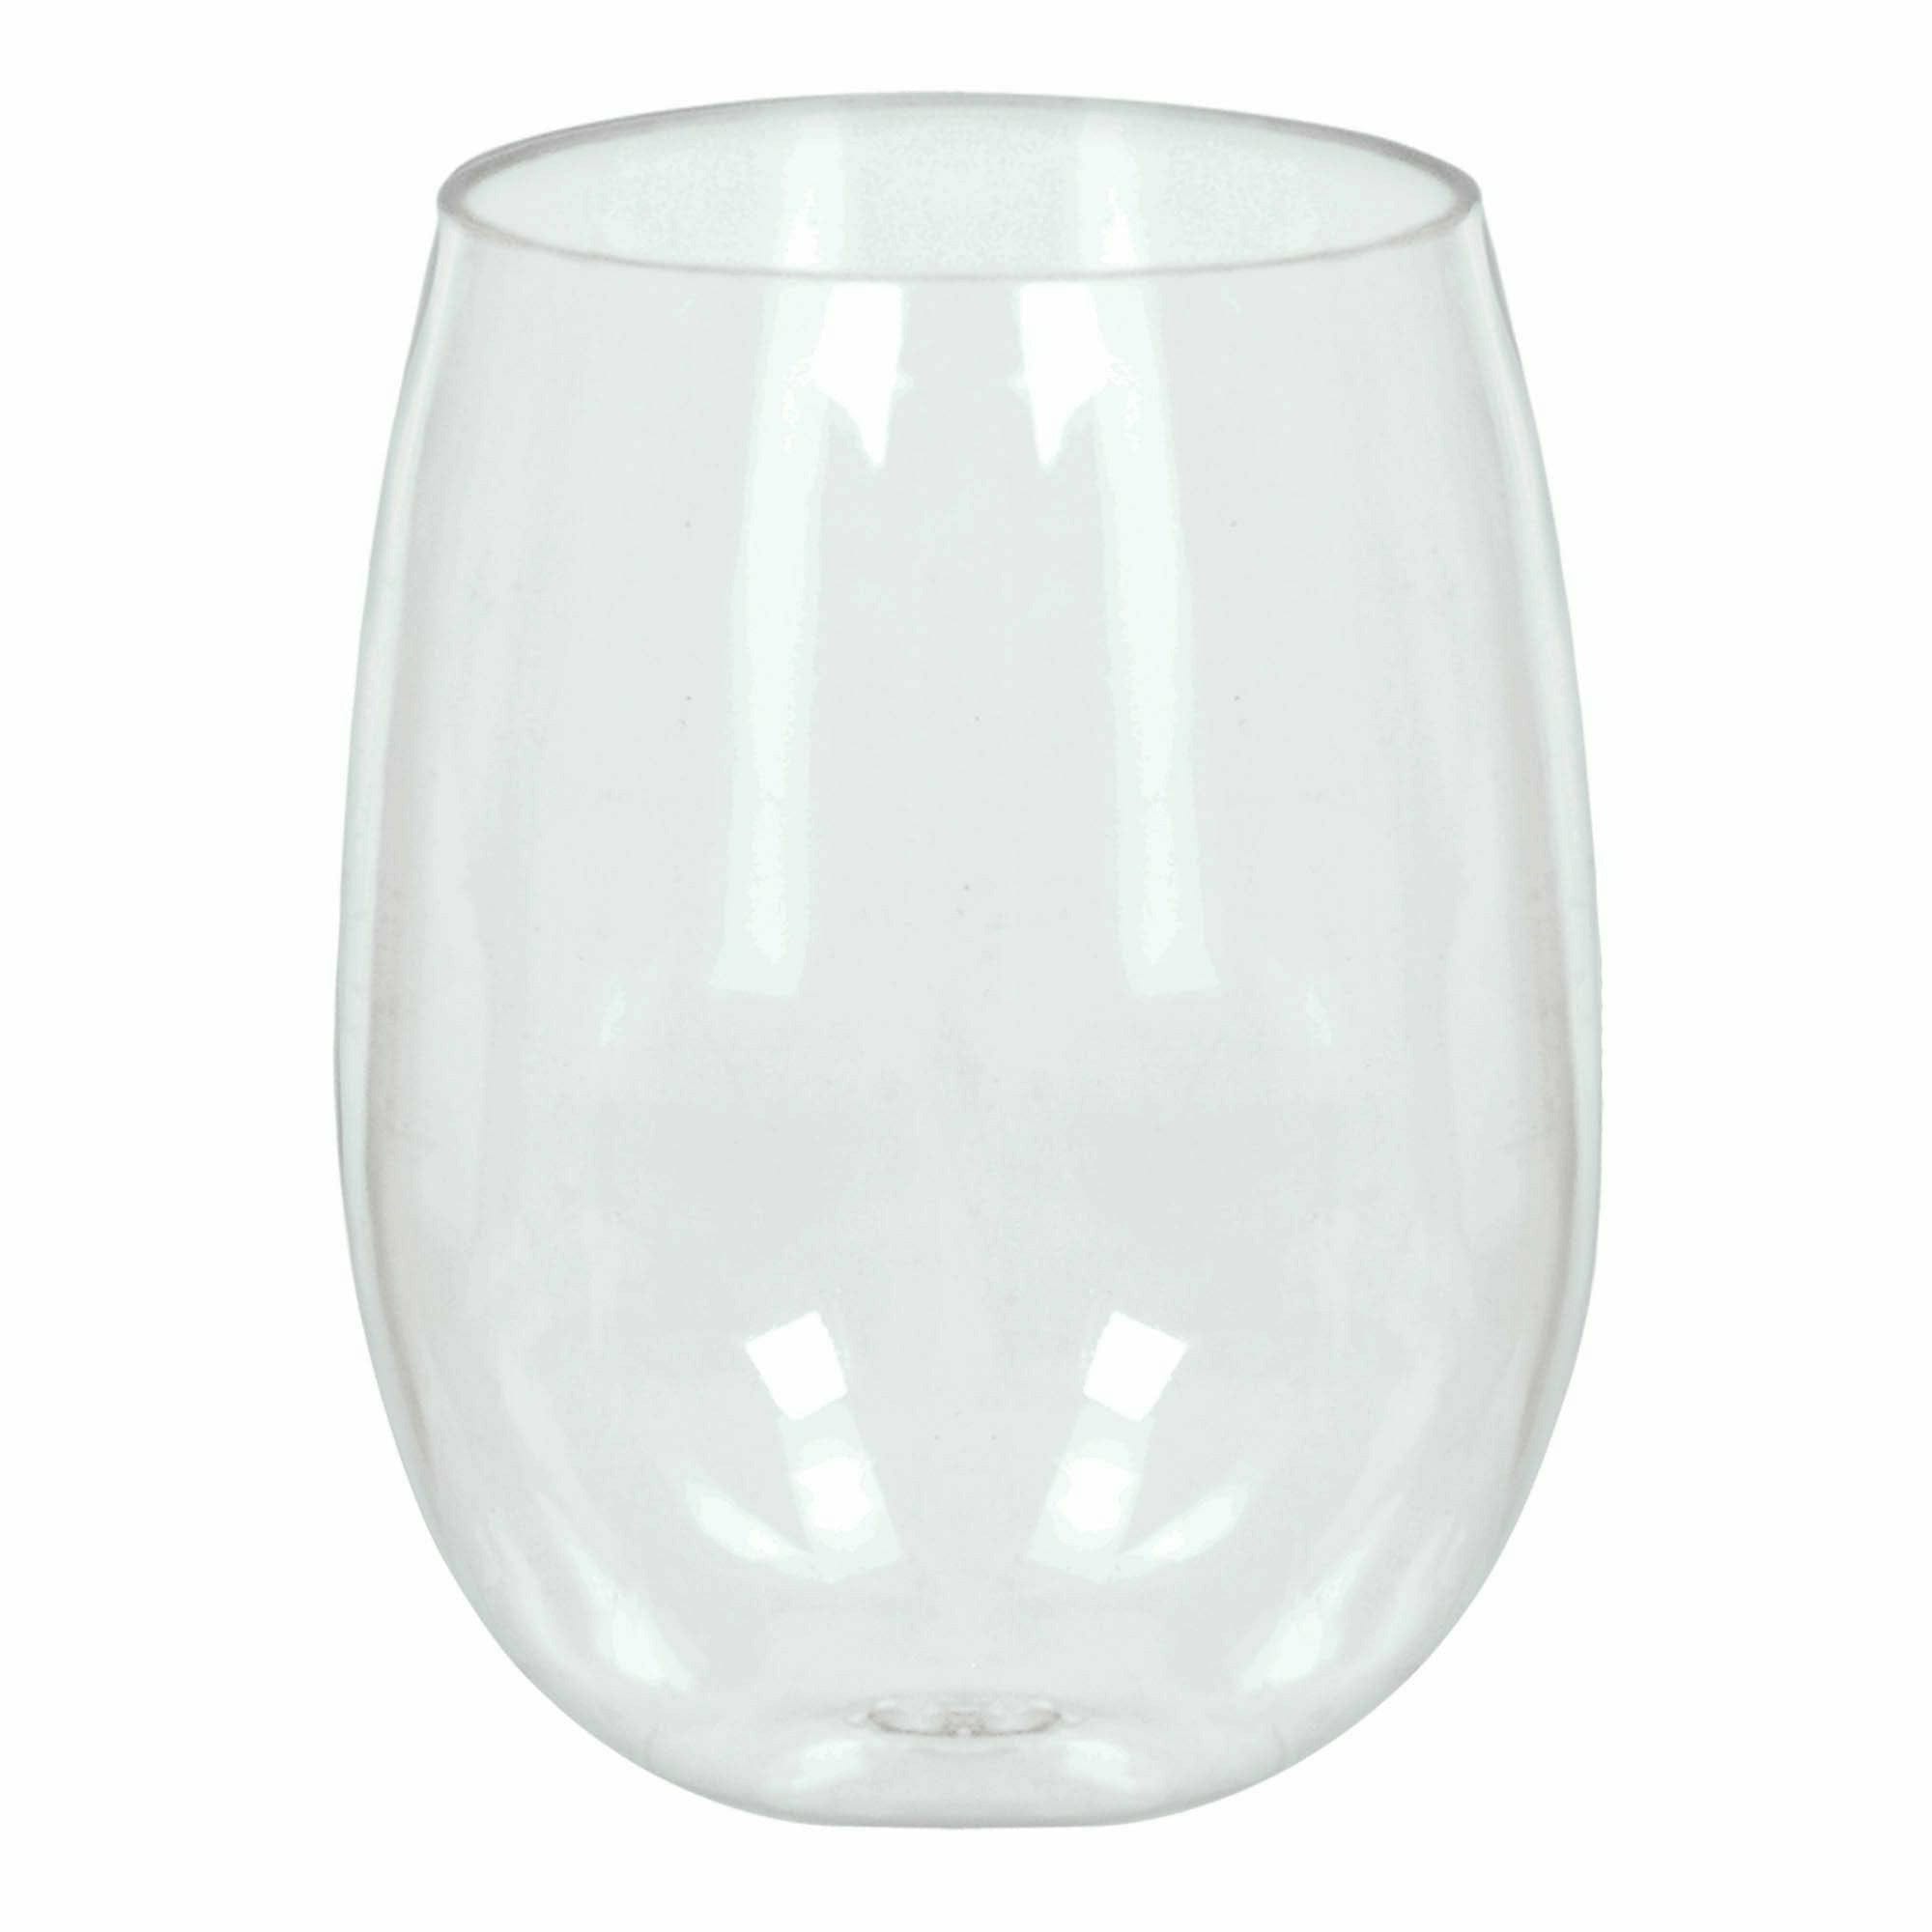 Amscan BASIC STEMLESS WINE GLASSES 8 CT